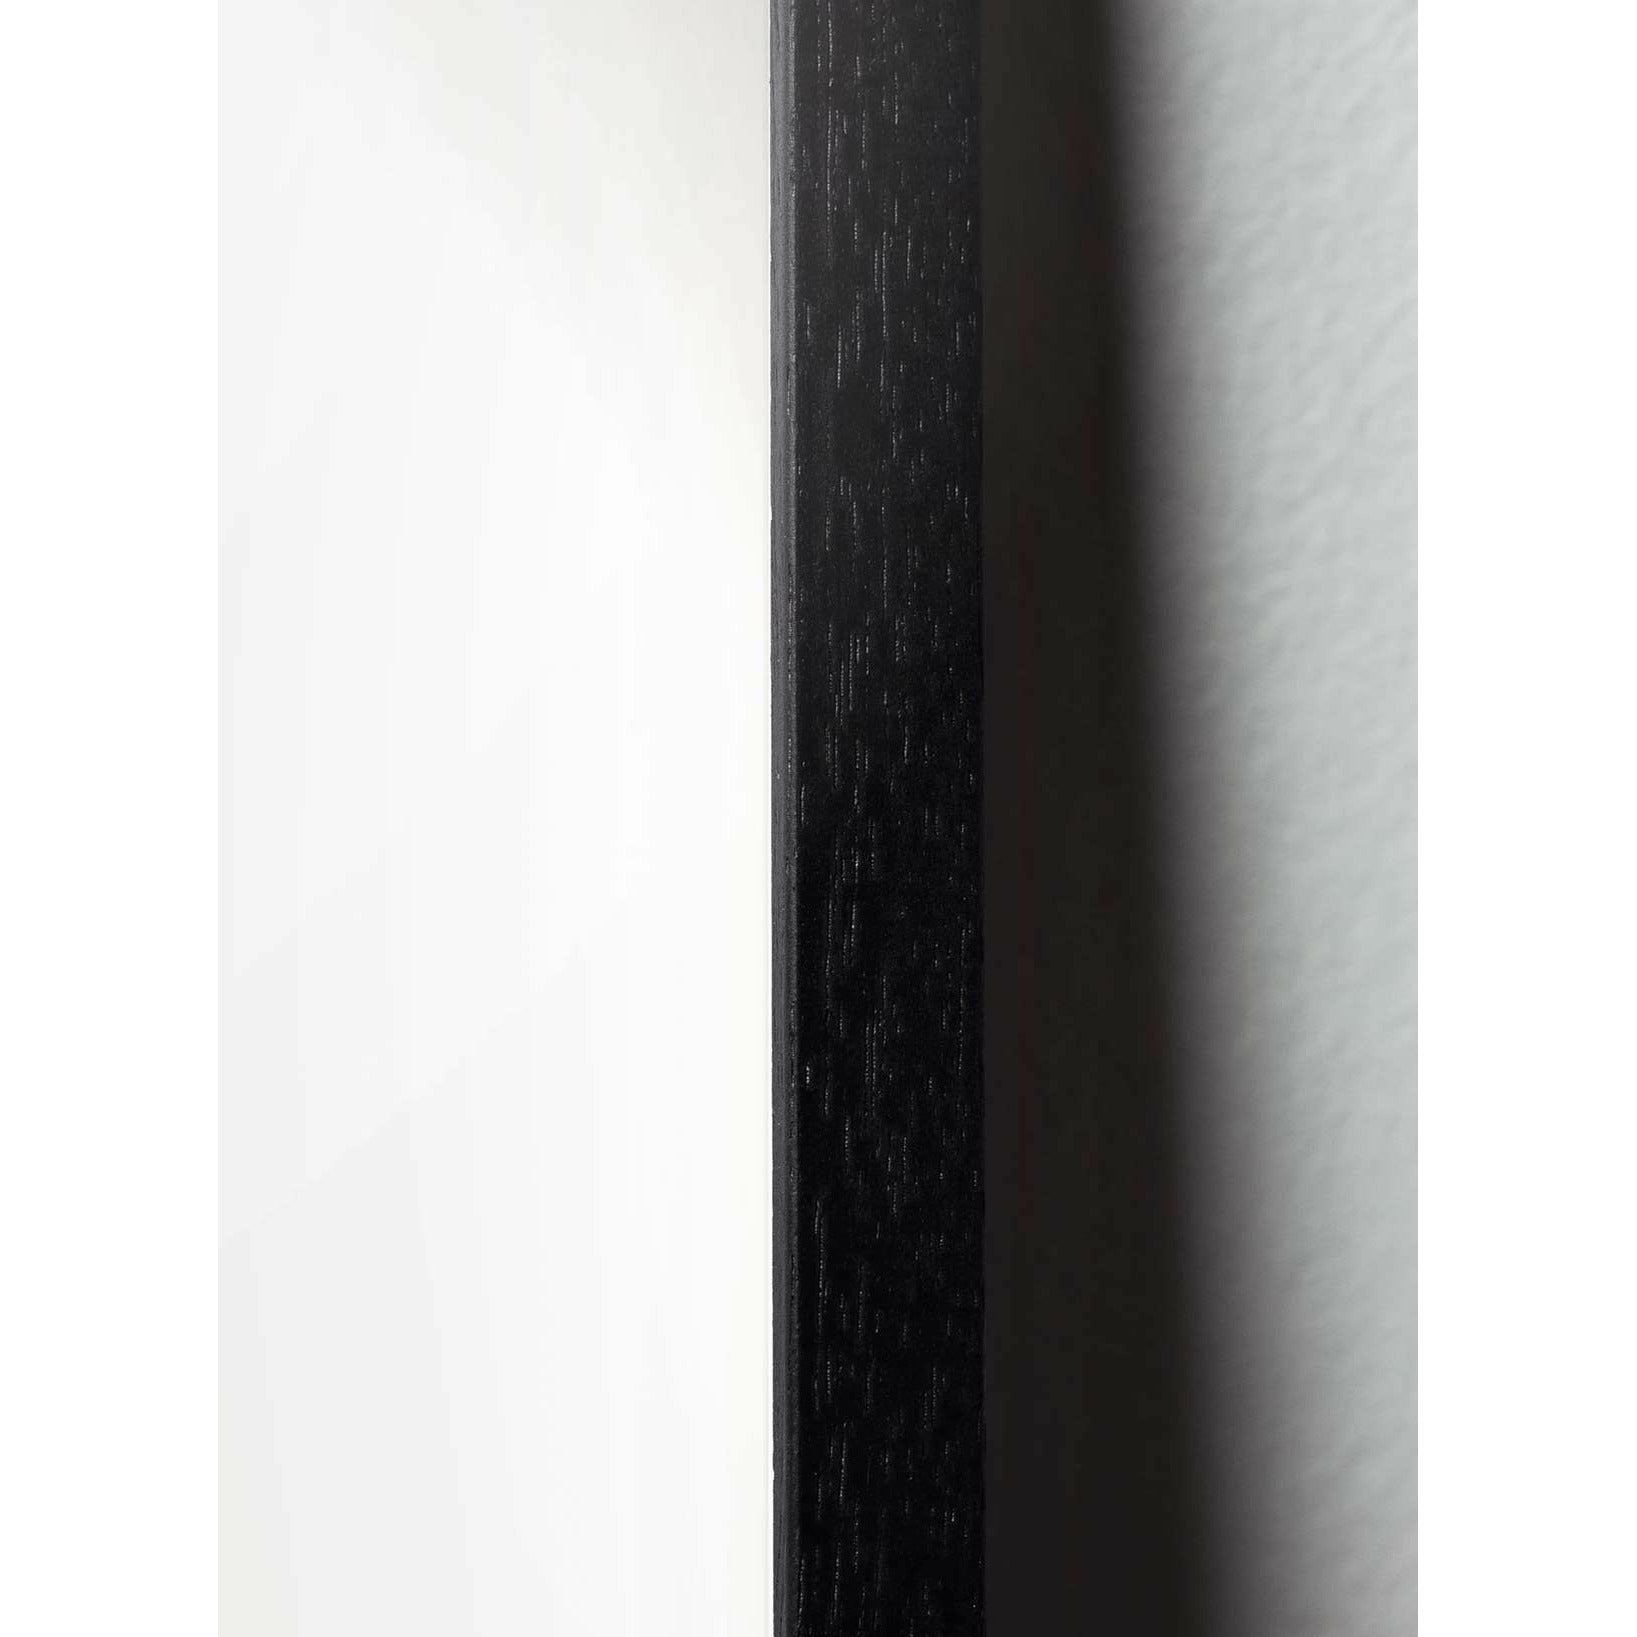 Brainchild Äggparadaffisch, ram i svart -målat trä, 30x40 cm